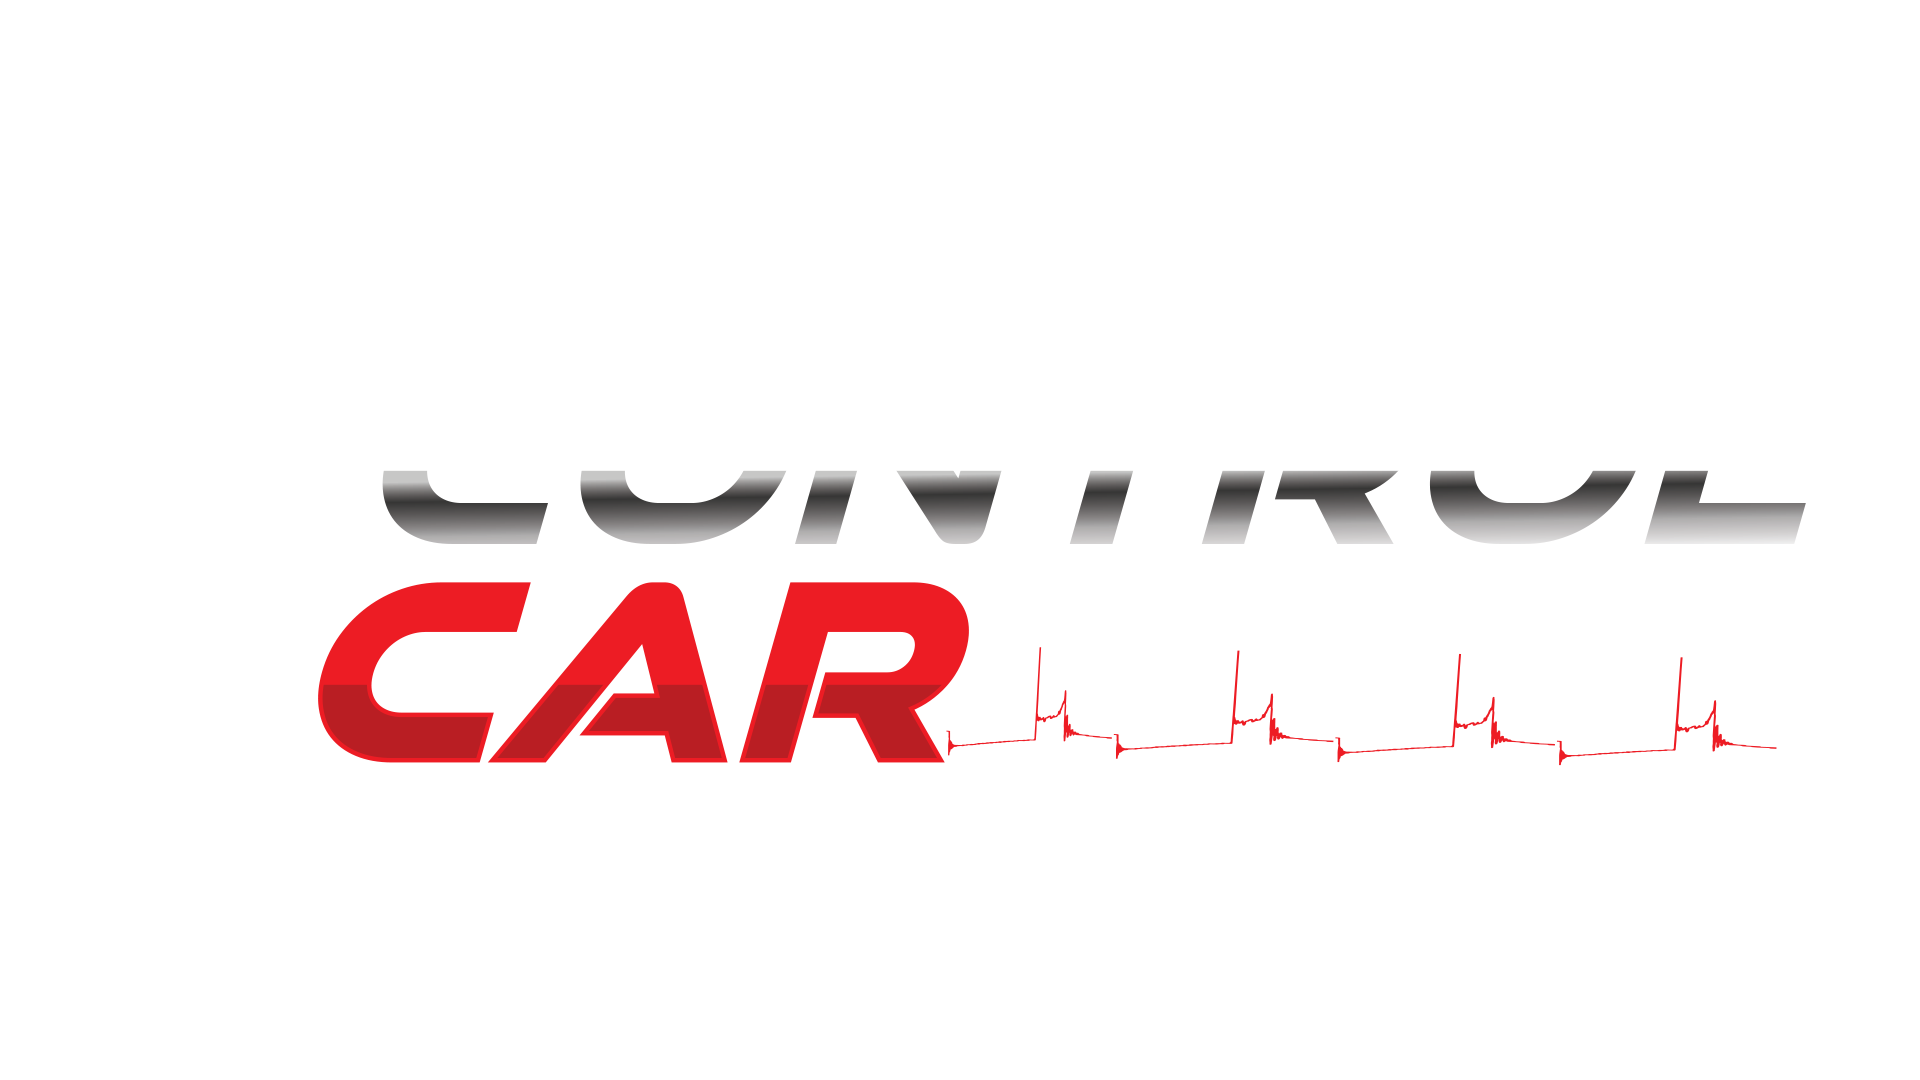 CONTROL CAR